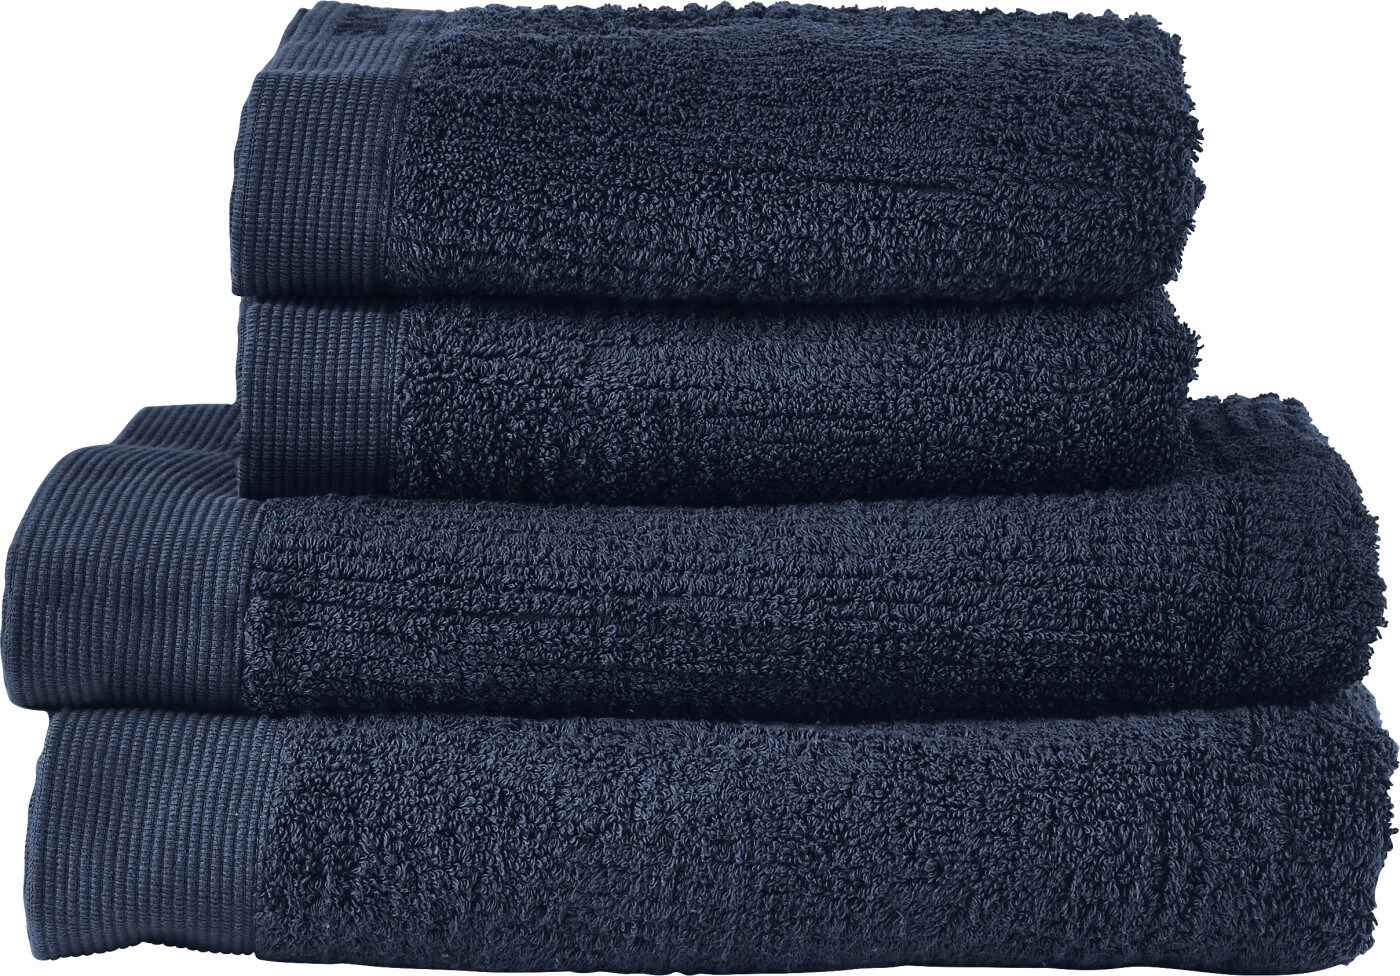 Zone - Classic Håndklæder - Mørkeblå - 4 Stk